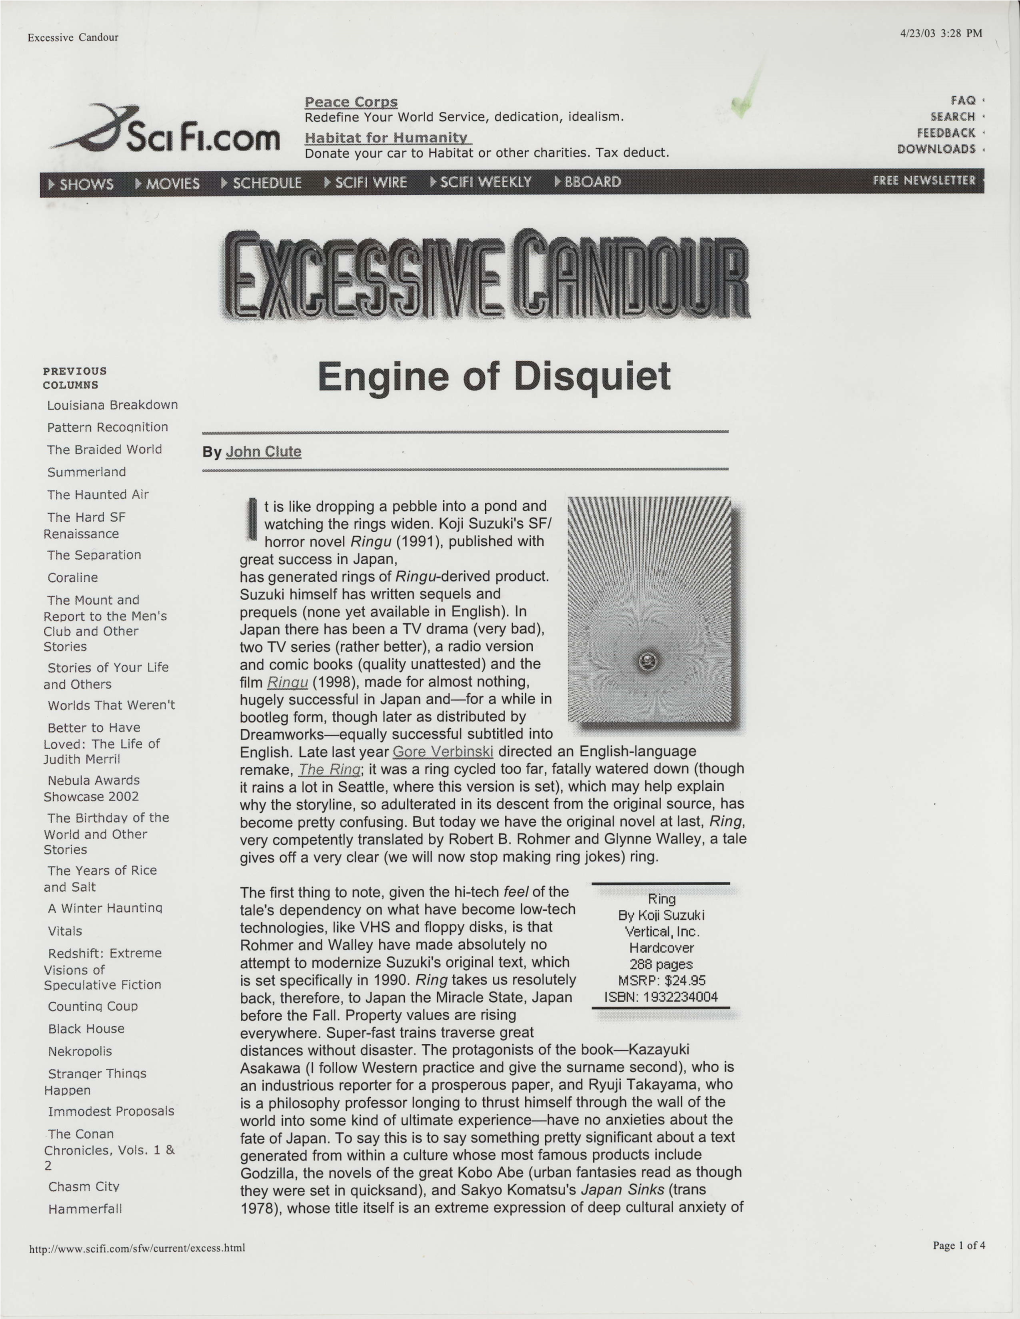 Engine of Disquiet